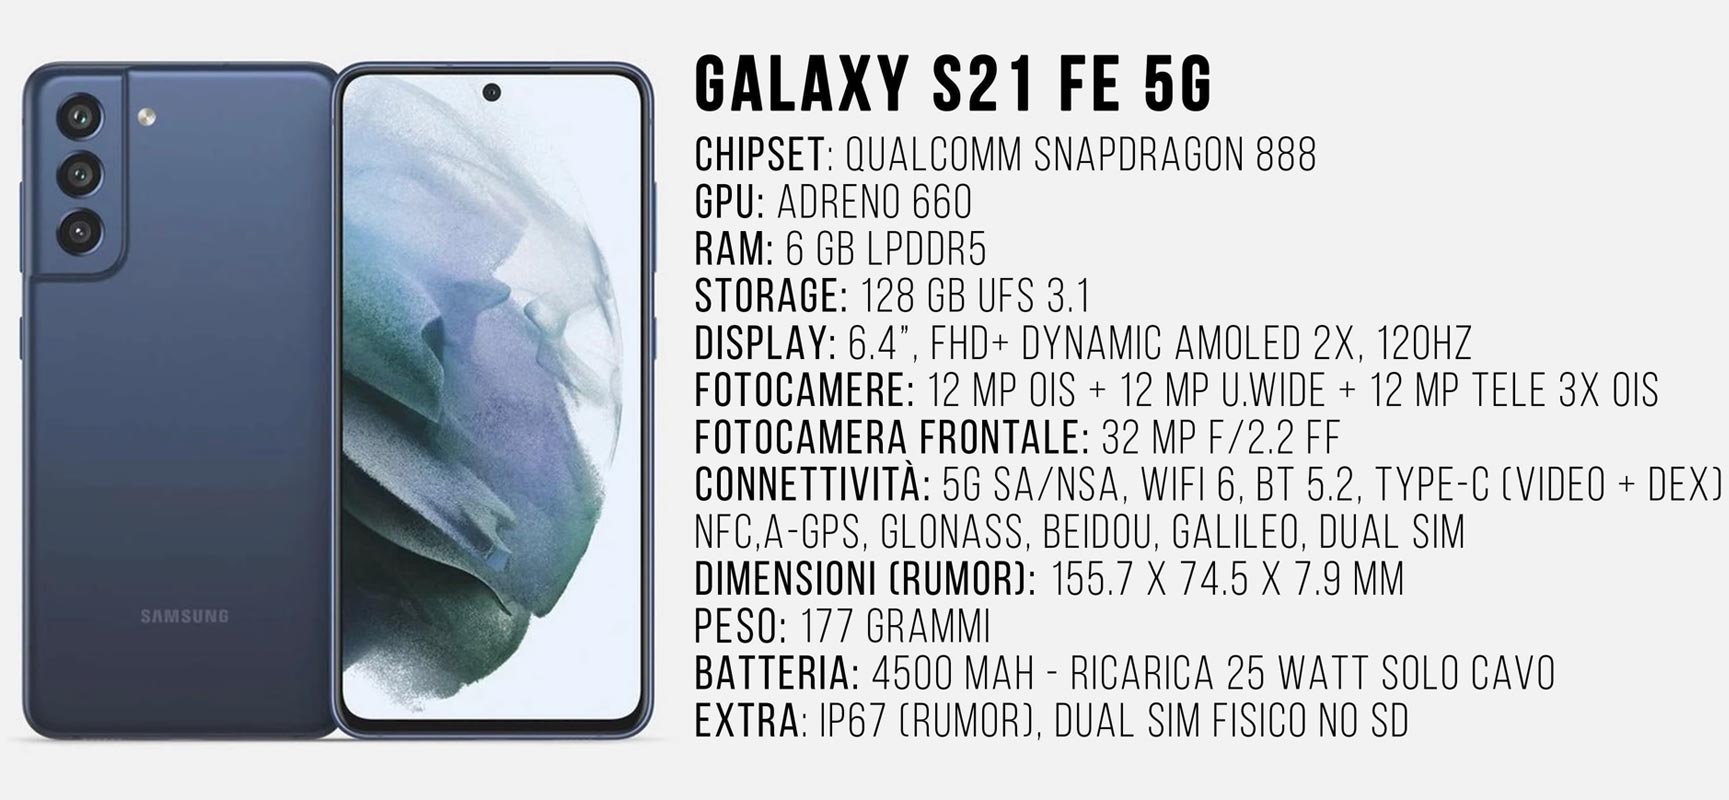 Samsung Galaxy s21 Fe 5g характеристики